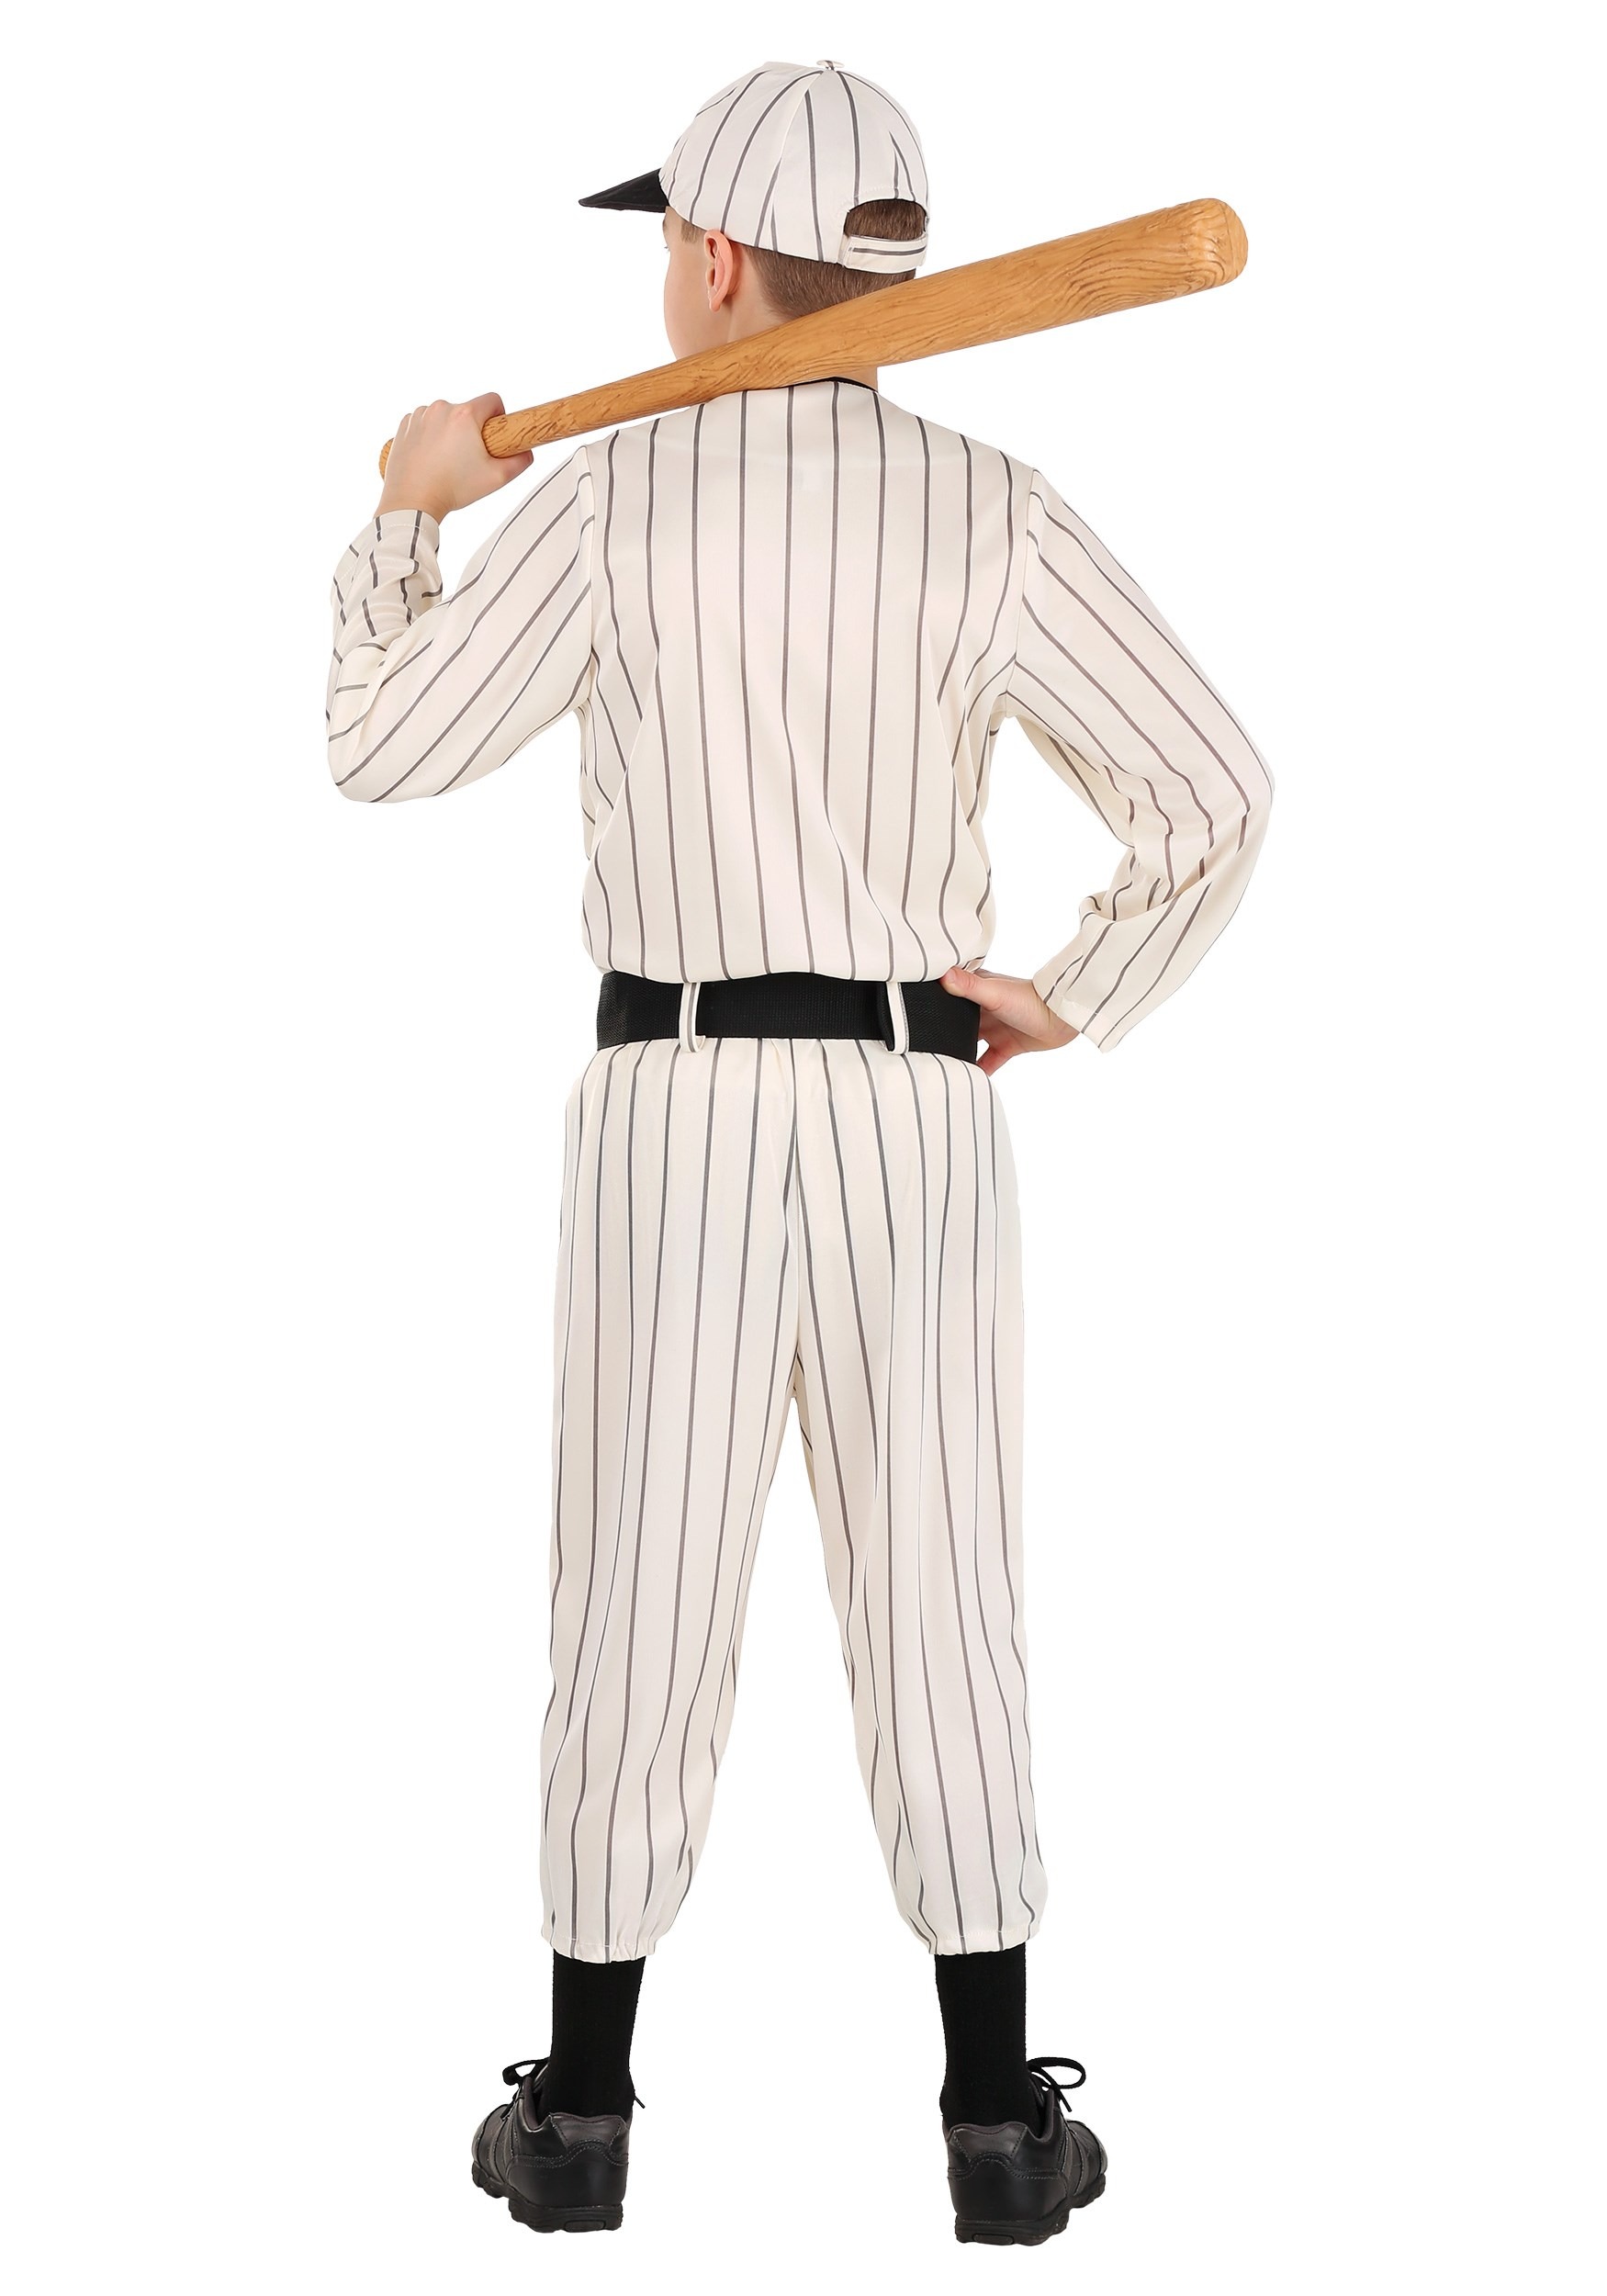 Vintage Child Baseball Costume